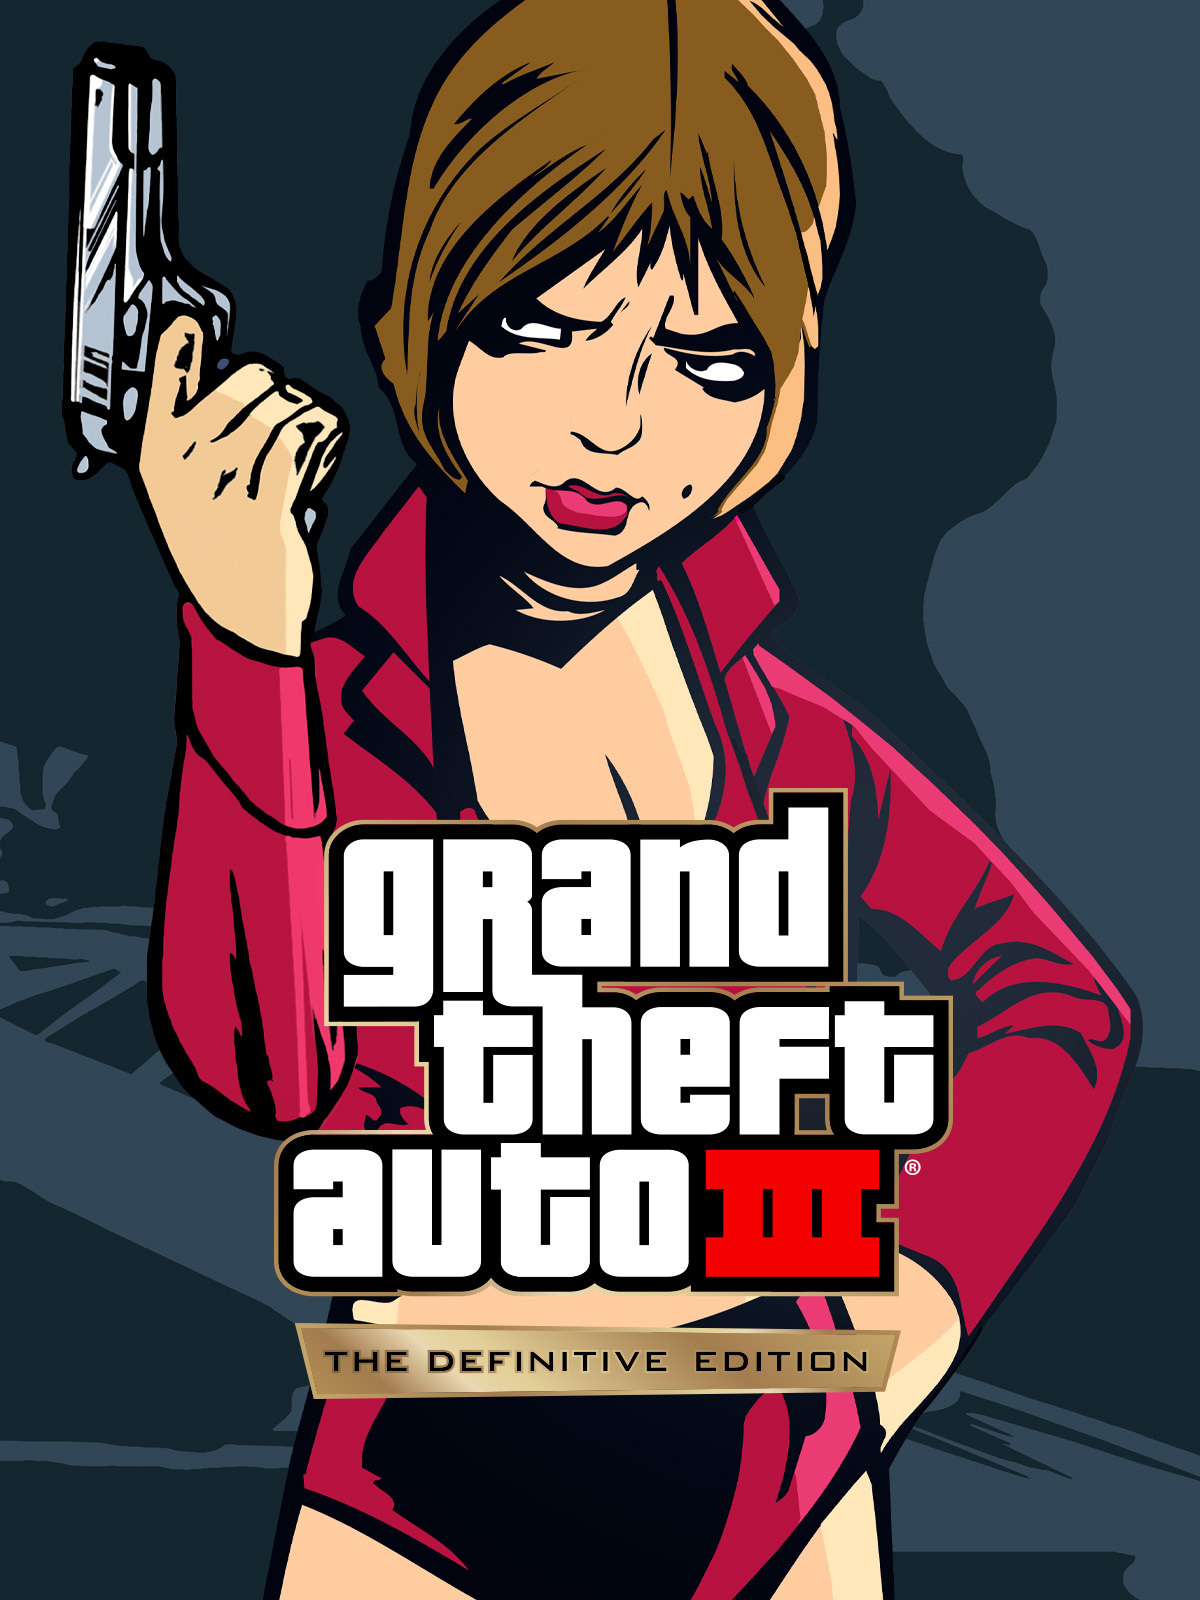 Grand Theft Auto: Liberty City Stories Box Shot for PSP - GameFAQs